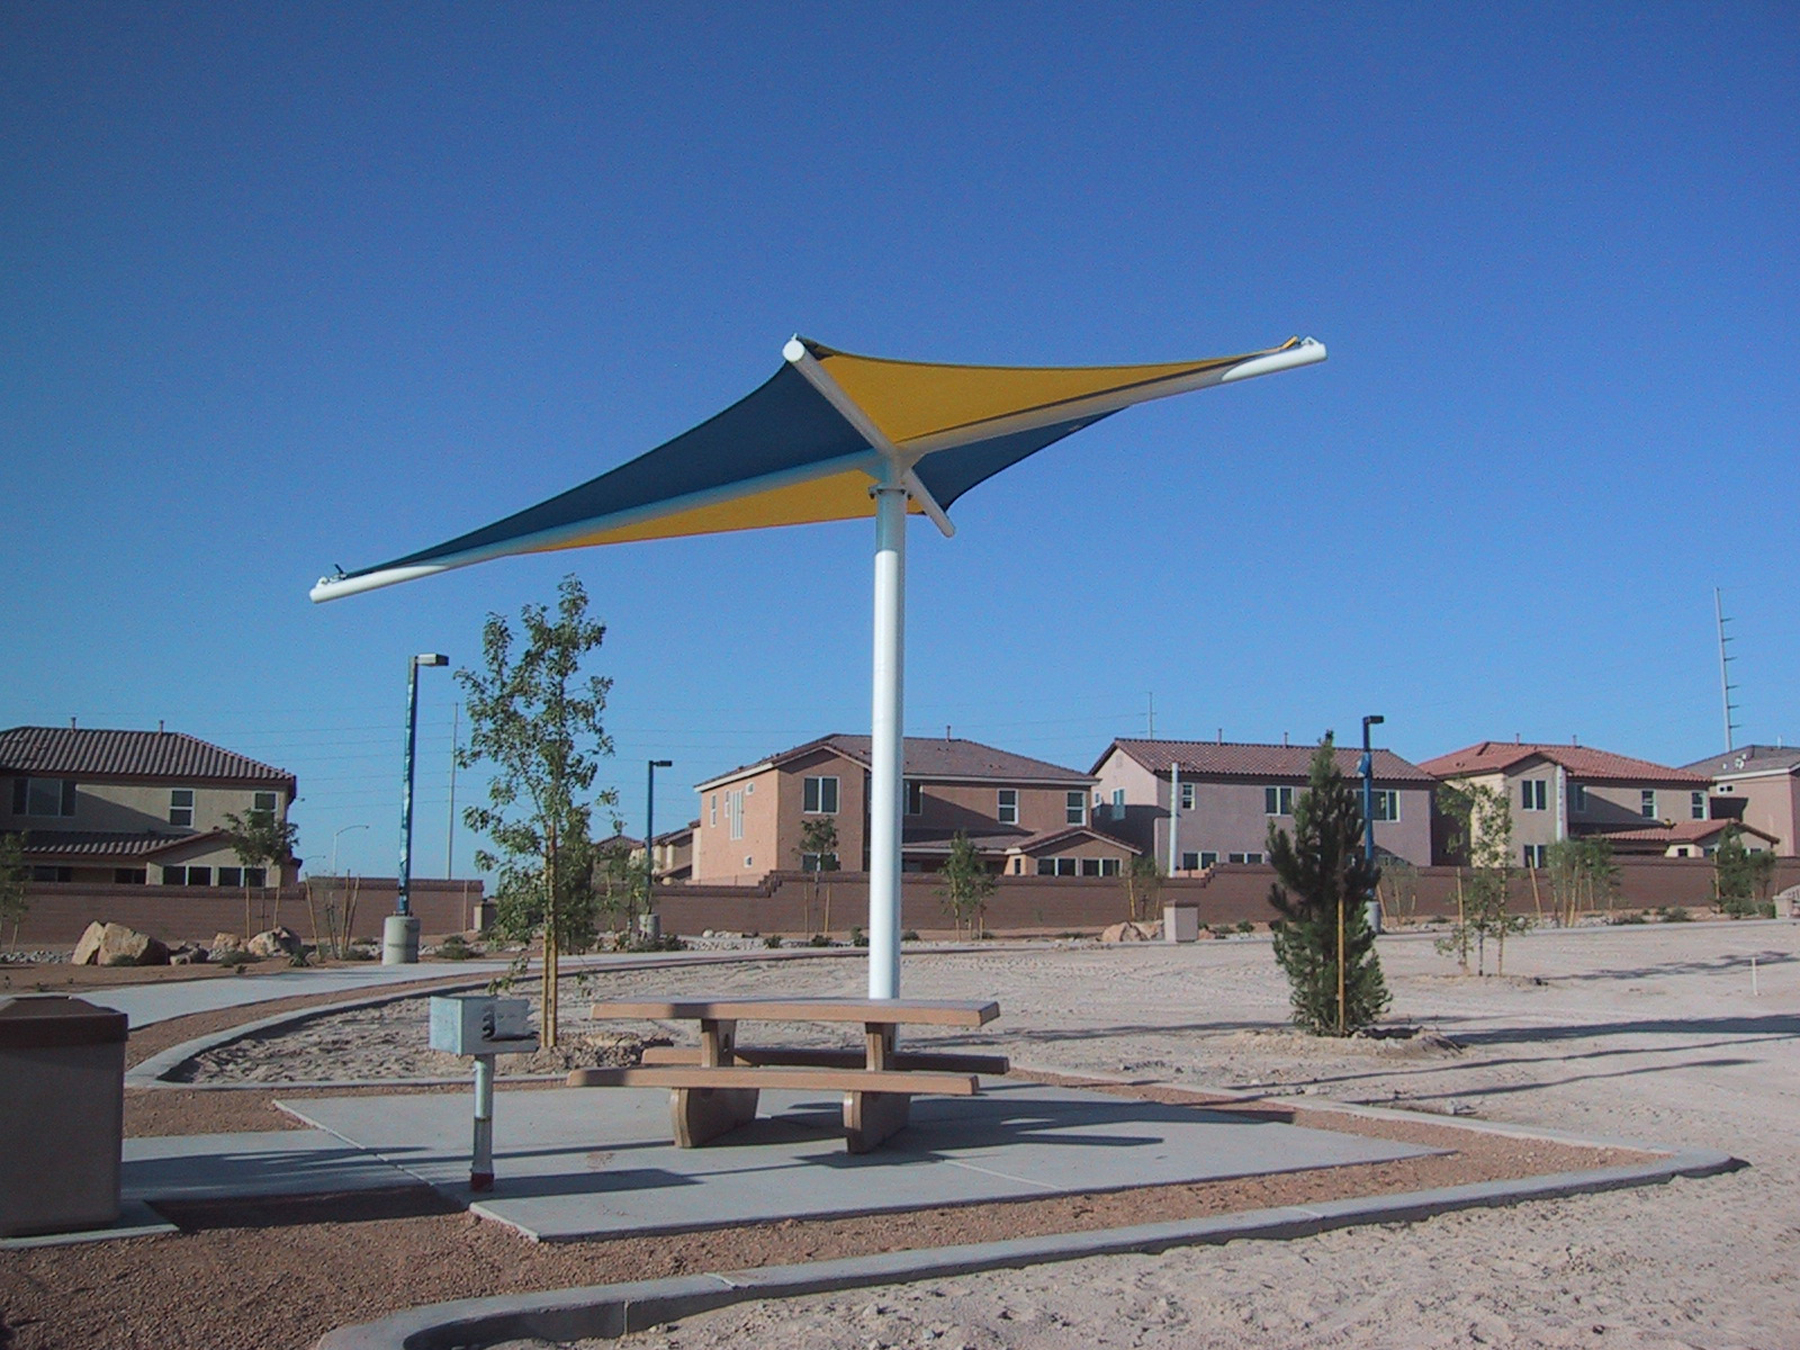 kite shaped usa shade over park picnic table